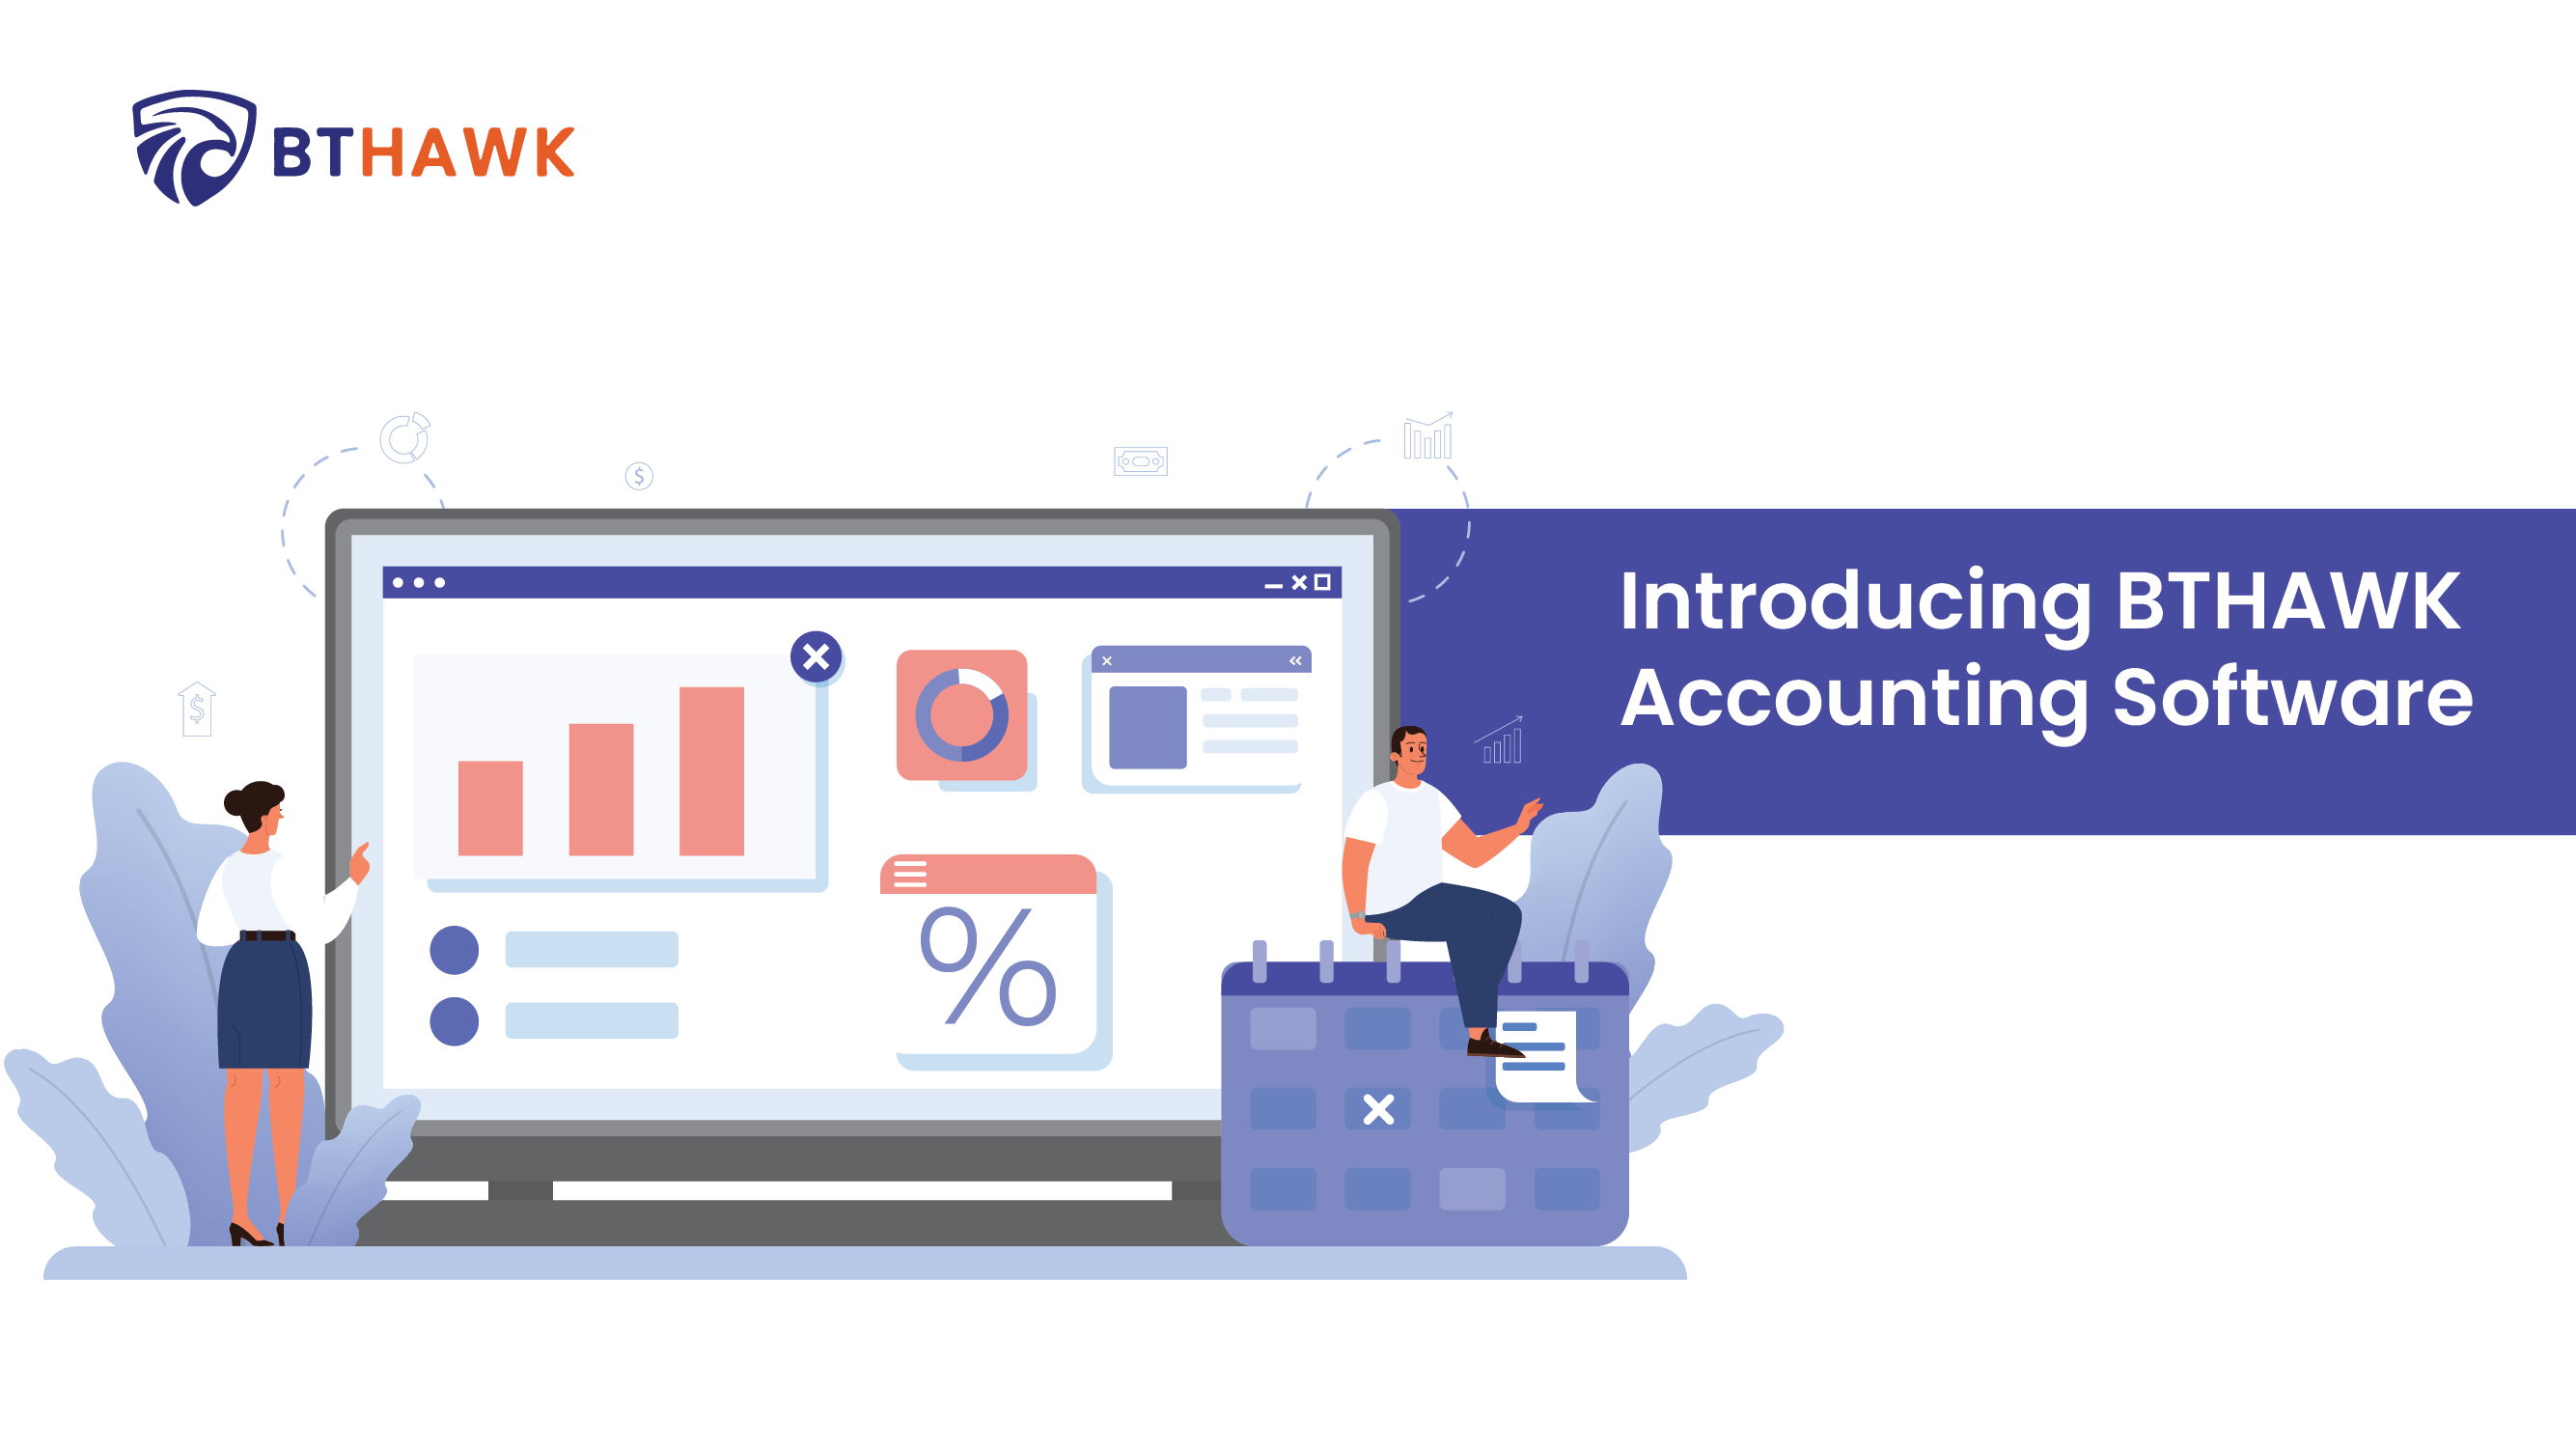 BTHAWK Accounting Software